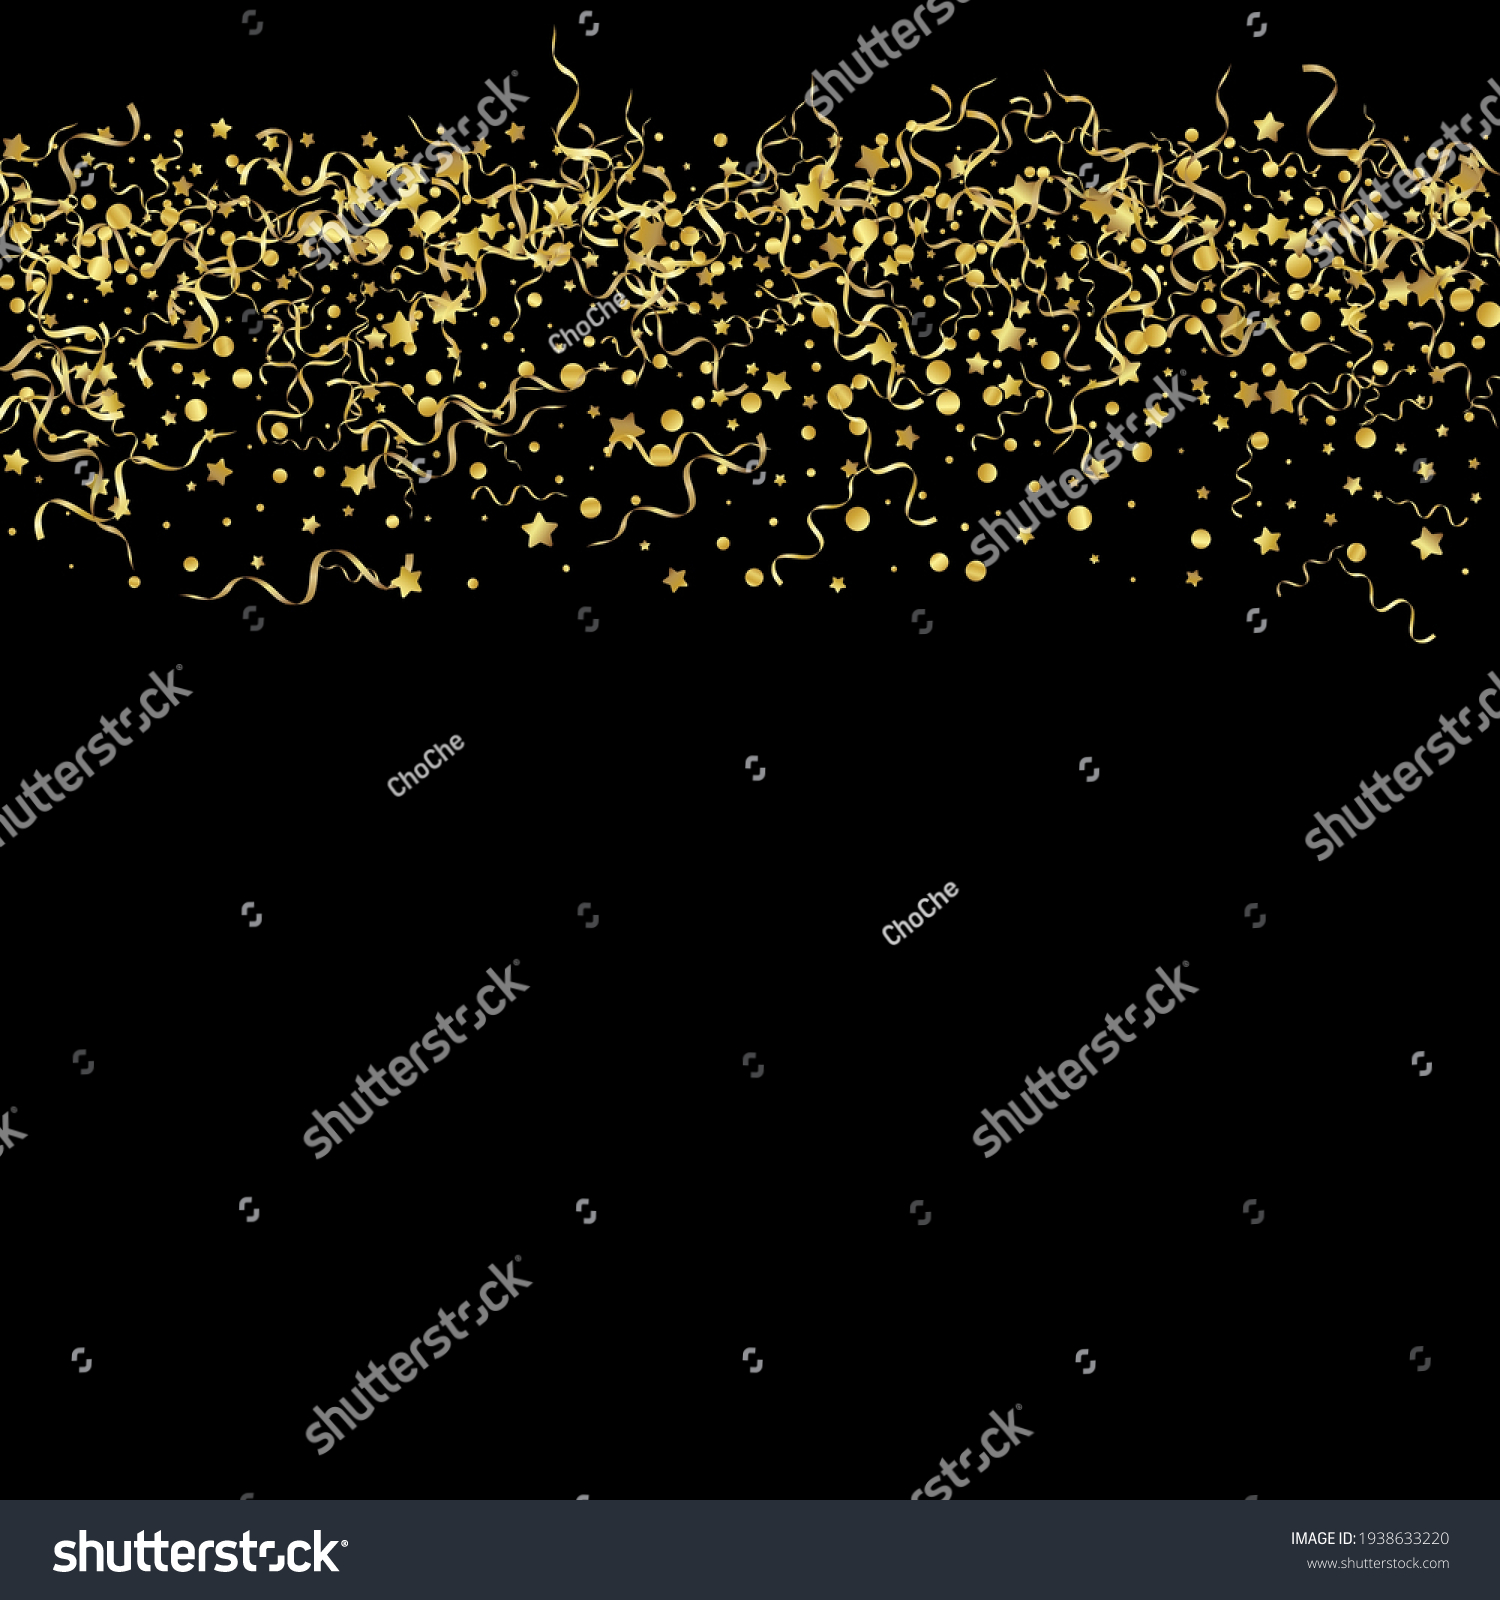 259,045 Gold confetti vector Images, Stock Photos & Vectors | Shutterstock